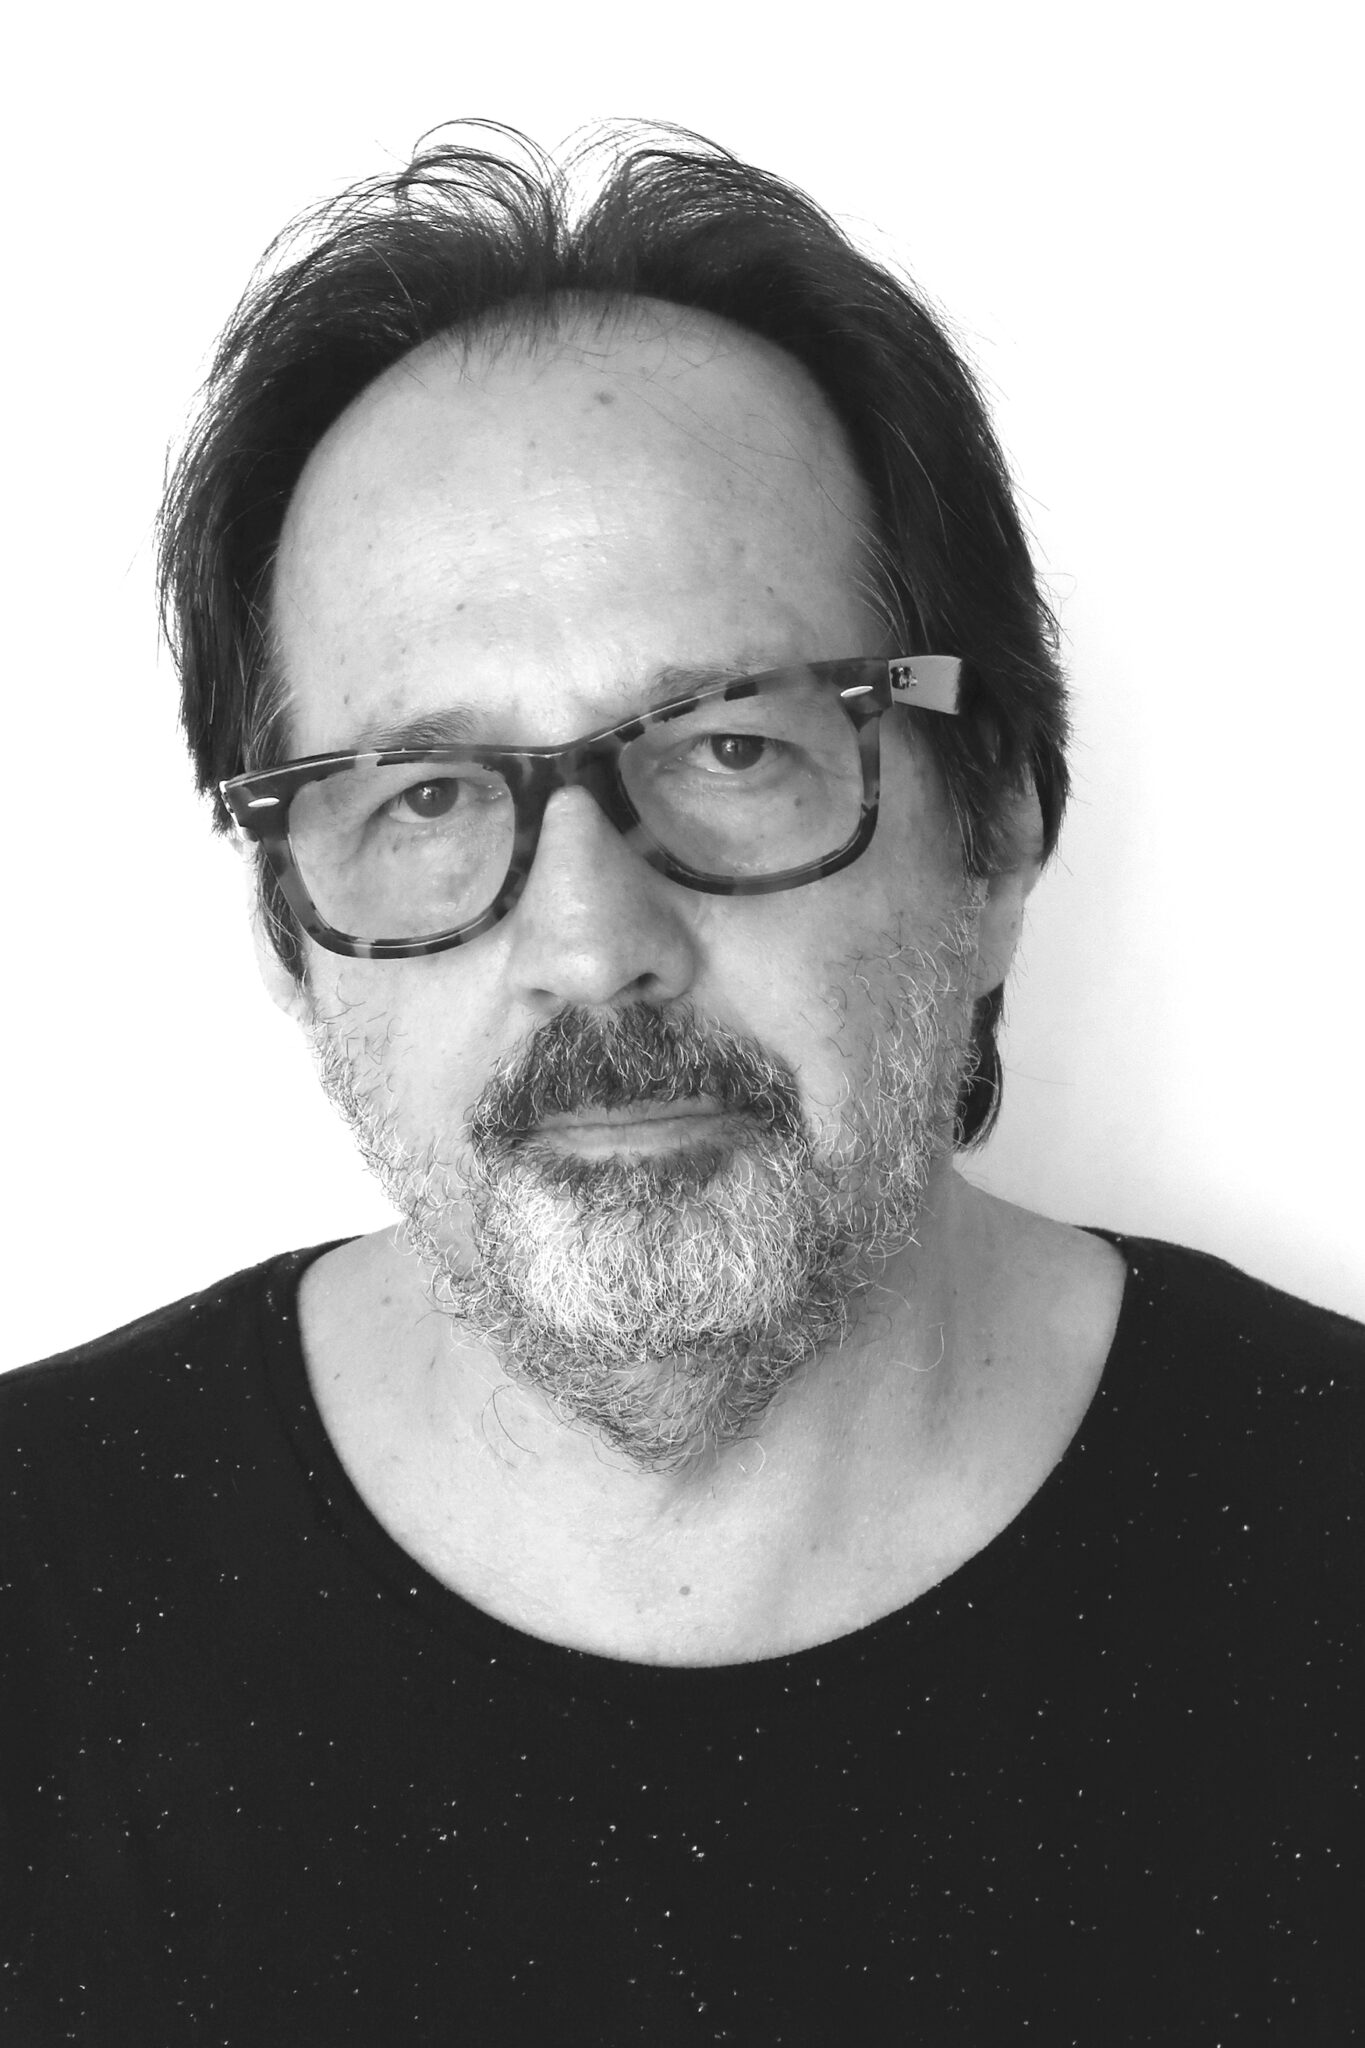 Headshot of a man wearing dark glasses.